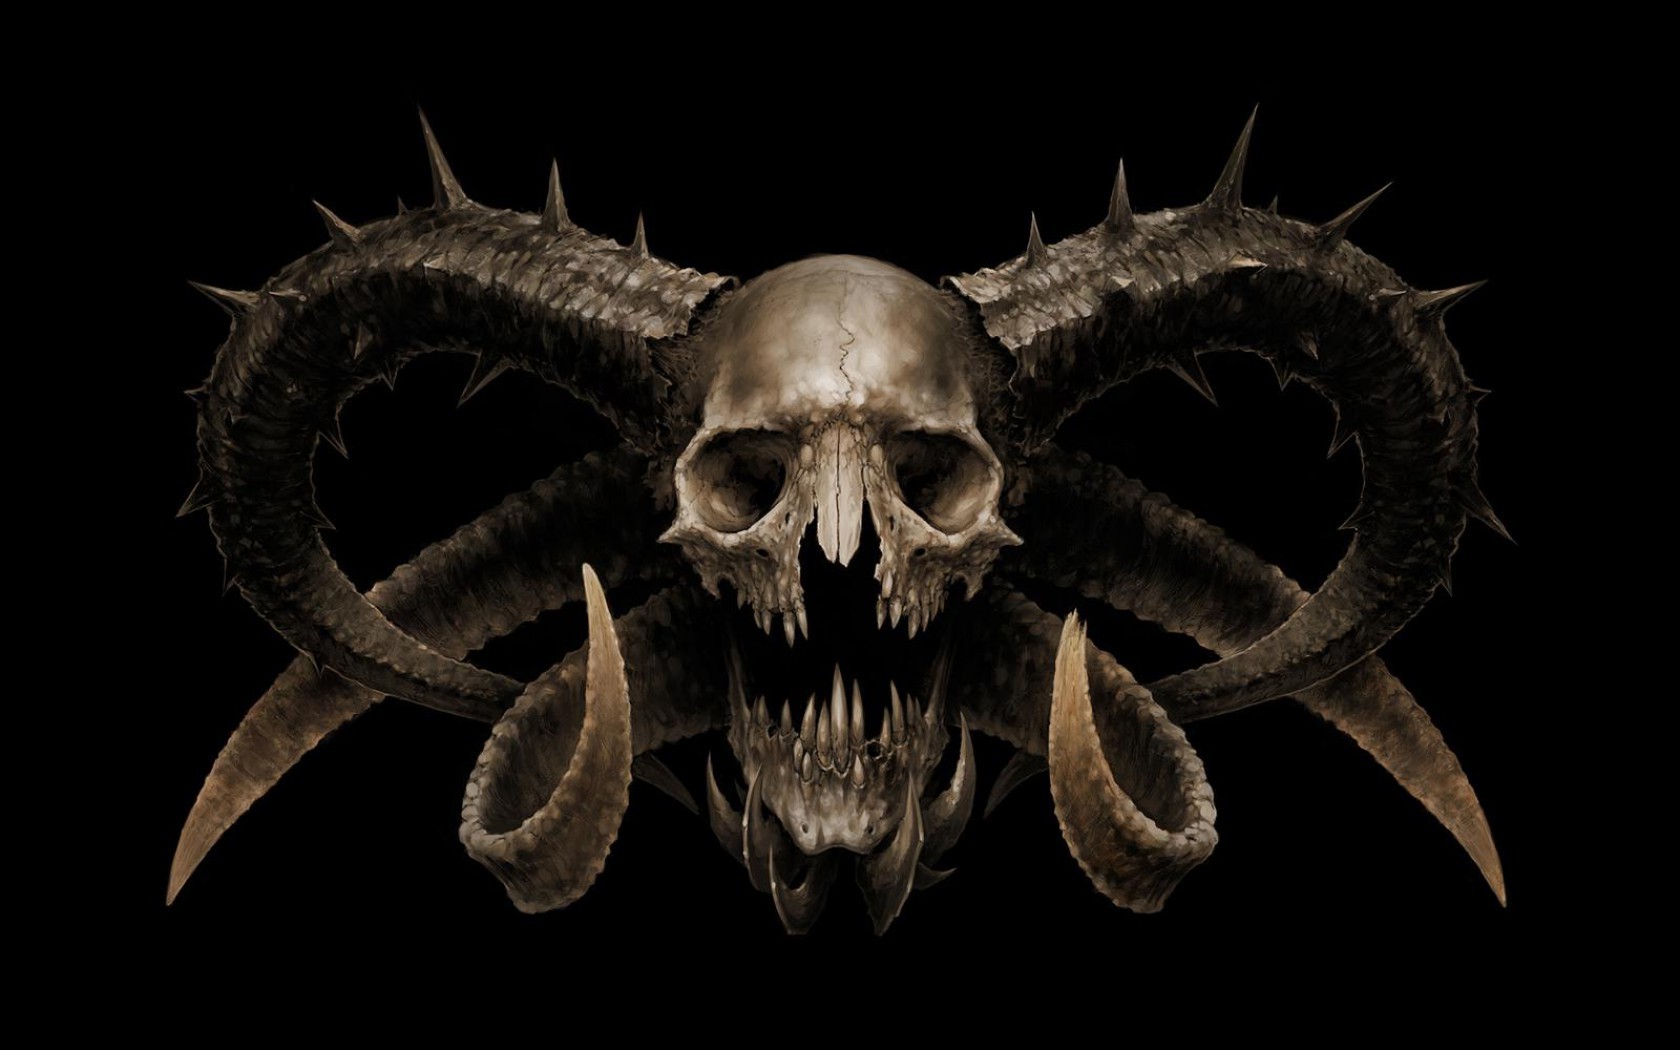 General 1680x1050 digital art creature skull horns demon fangs teeth devil black background death creepy horror